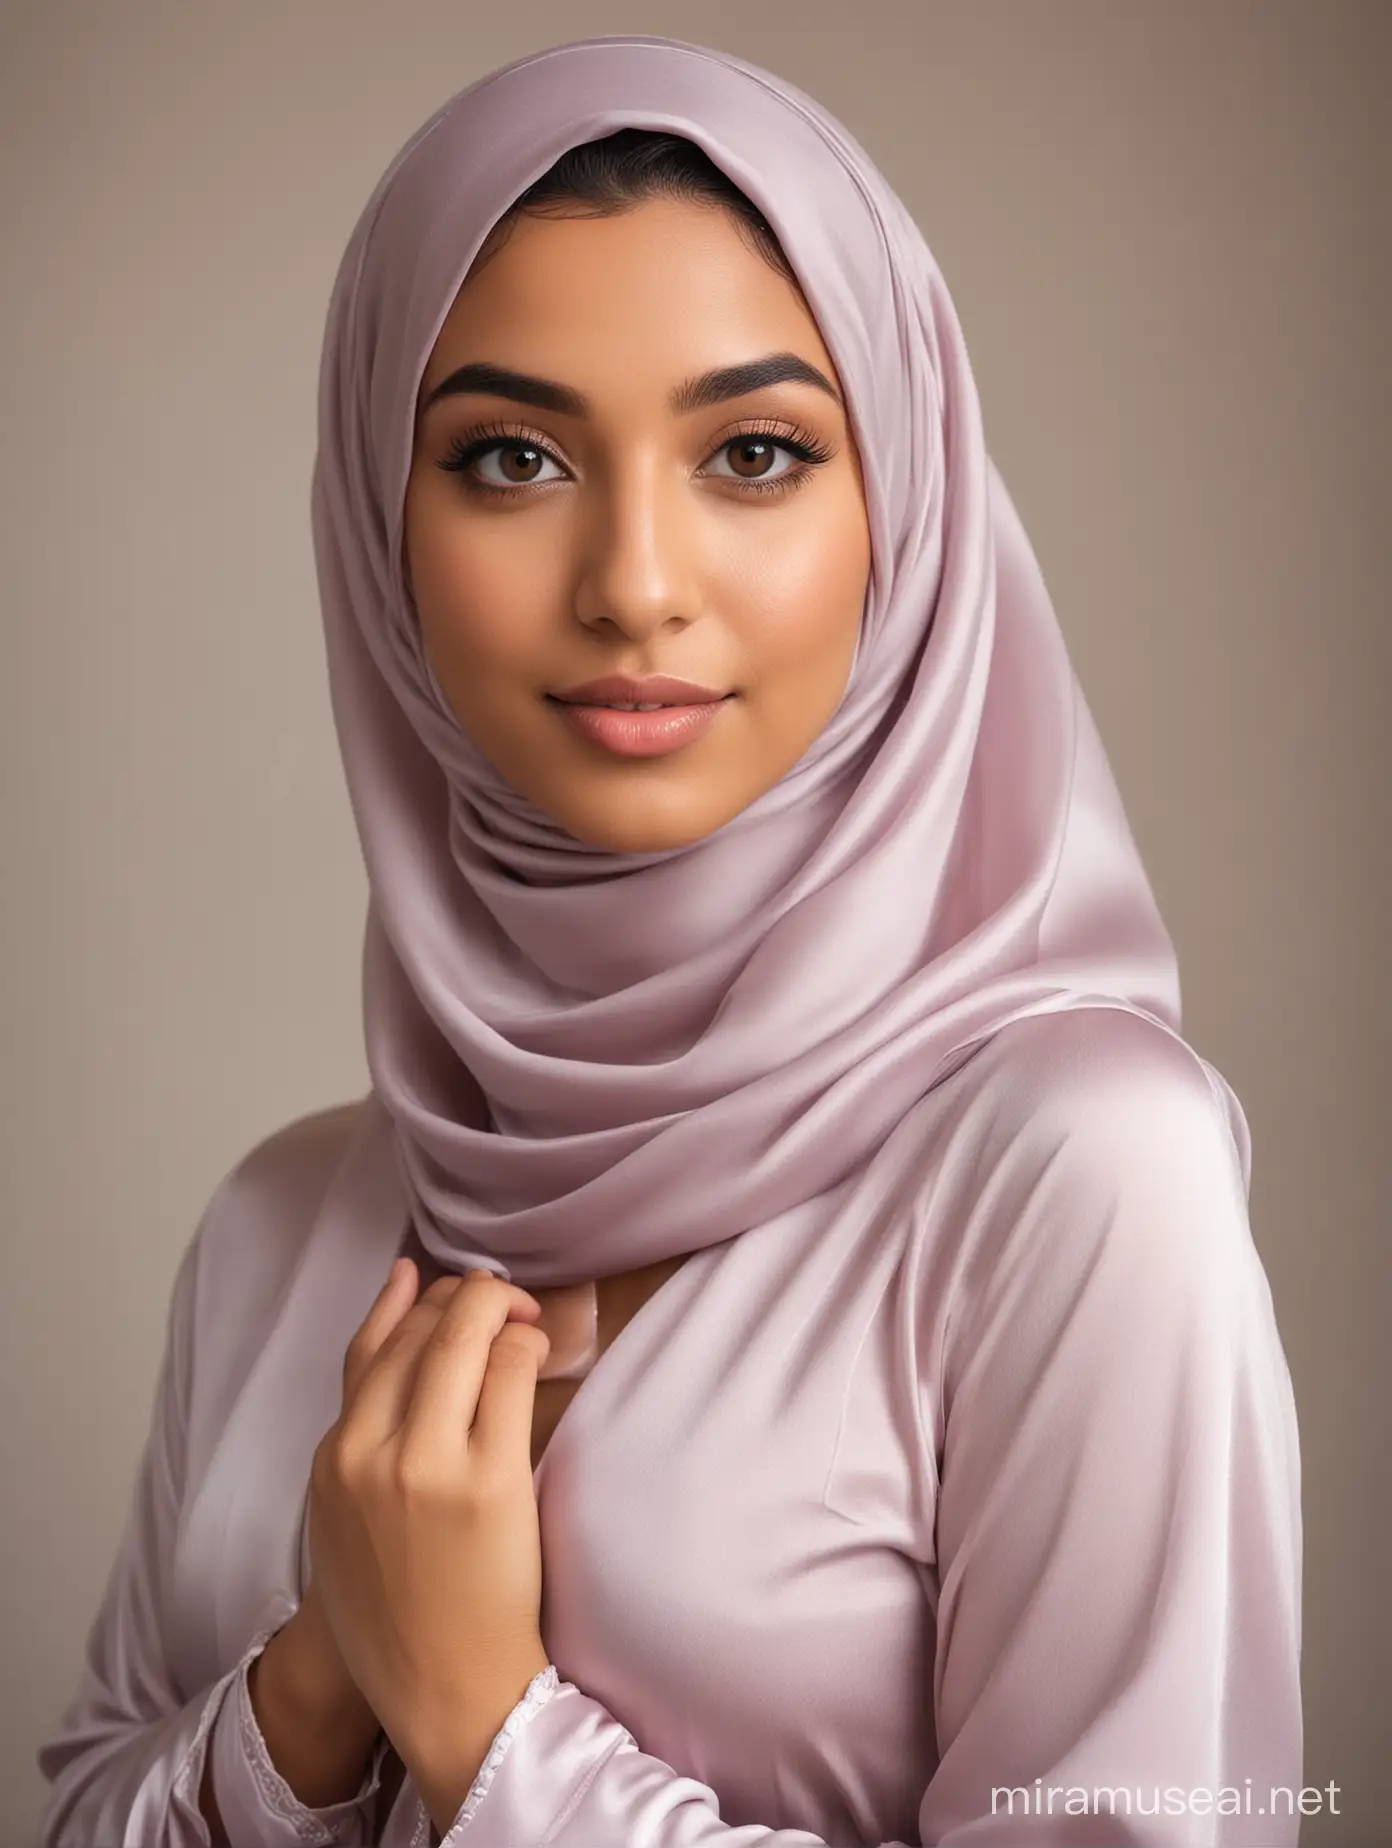 Elegant Muslim Woman in Silk Hijab and Lingerie